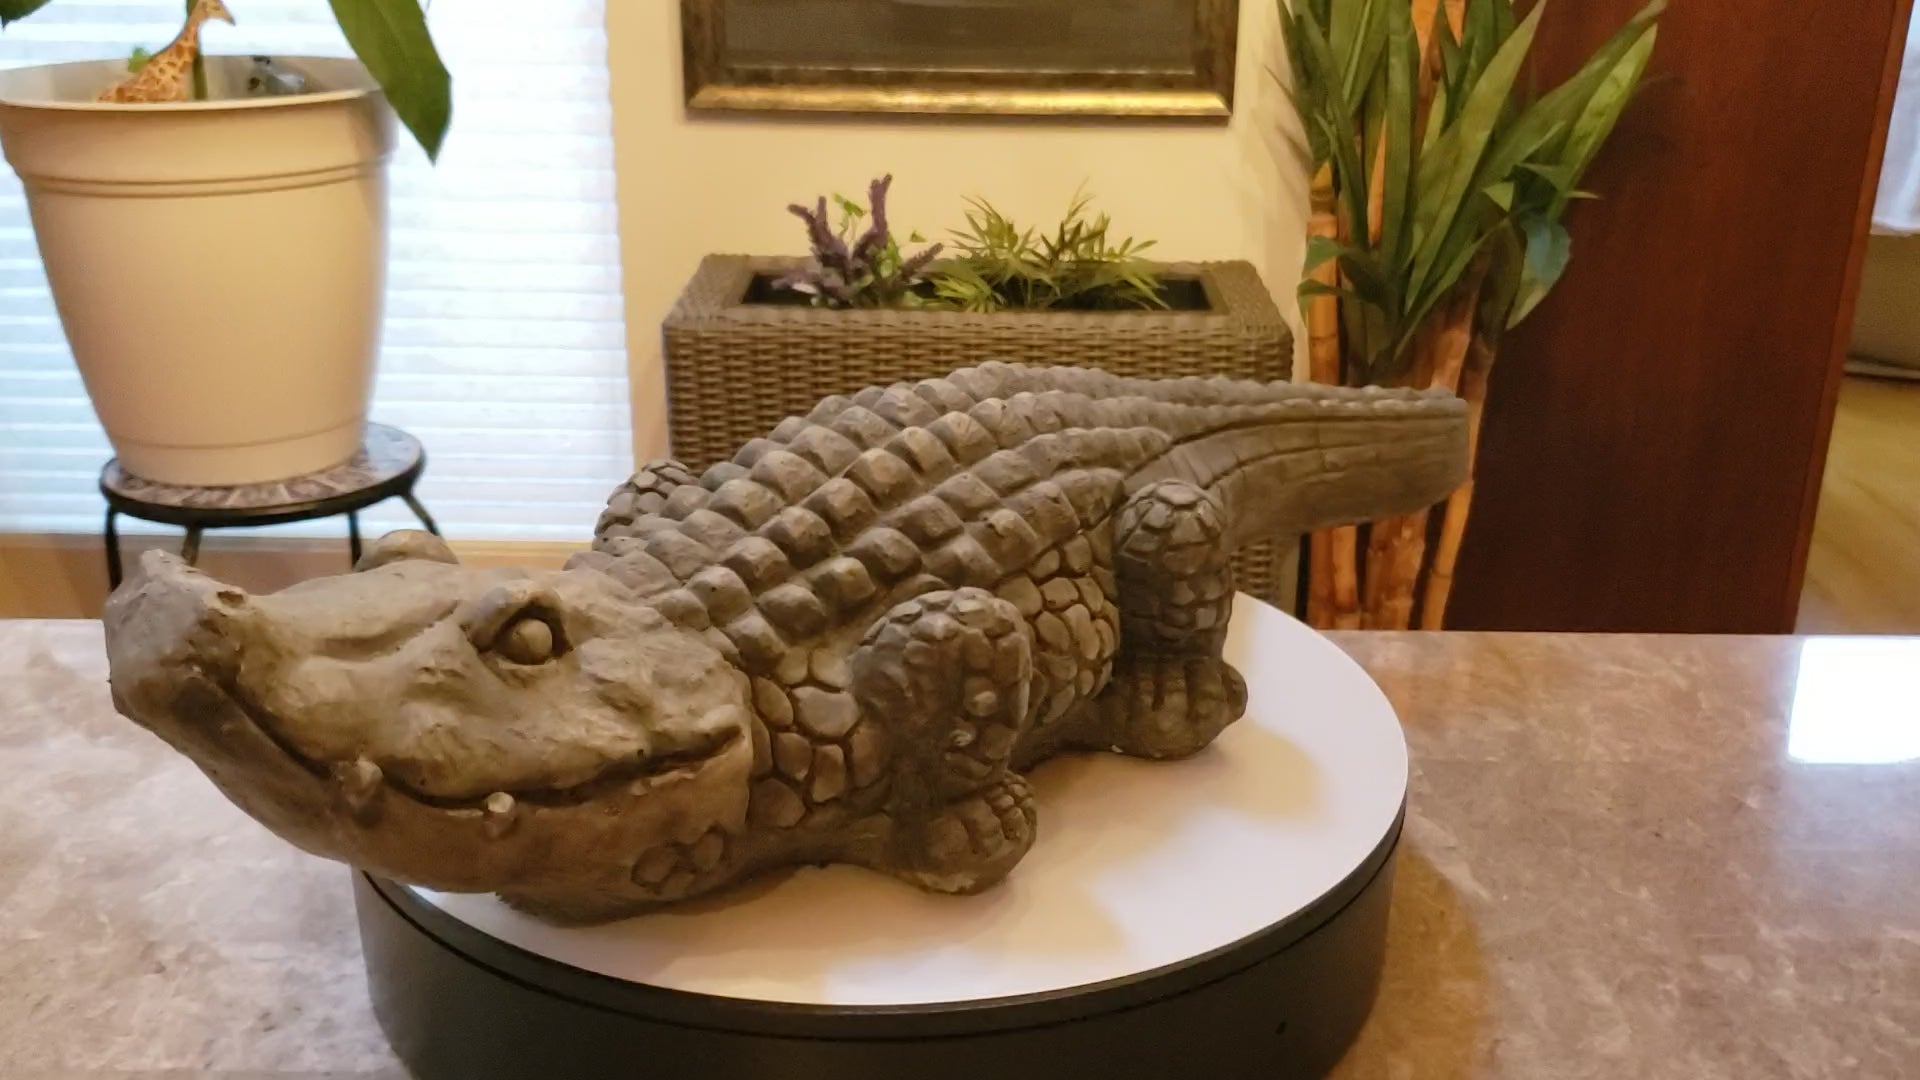 Auction for sale alligator statue